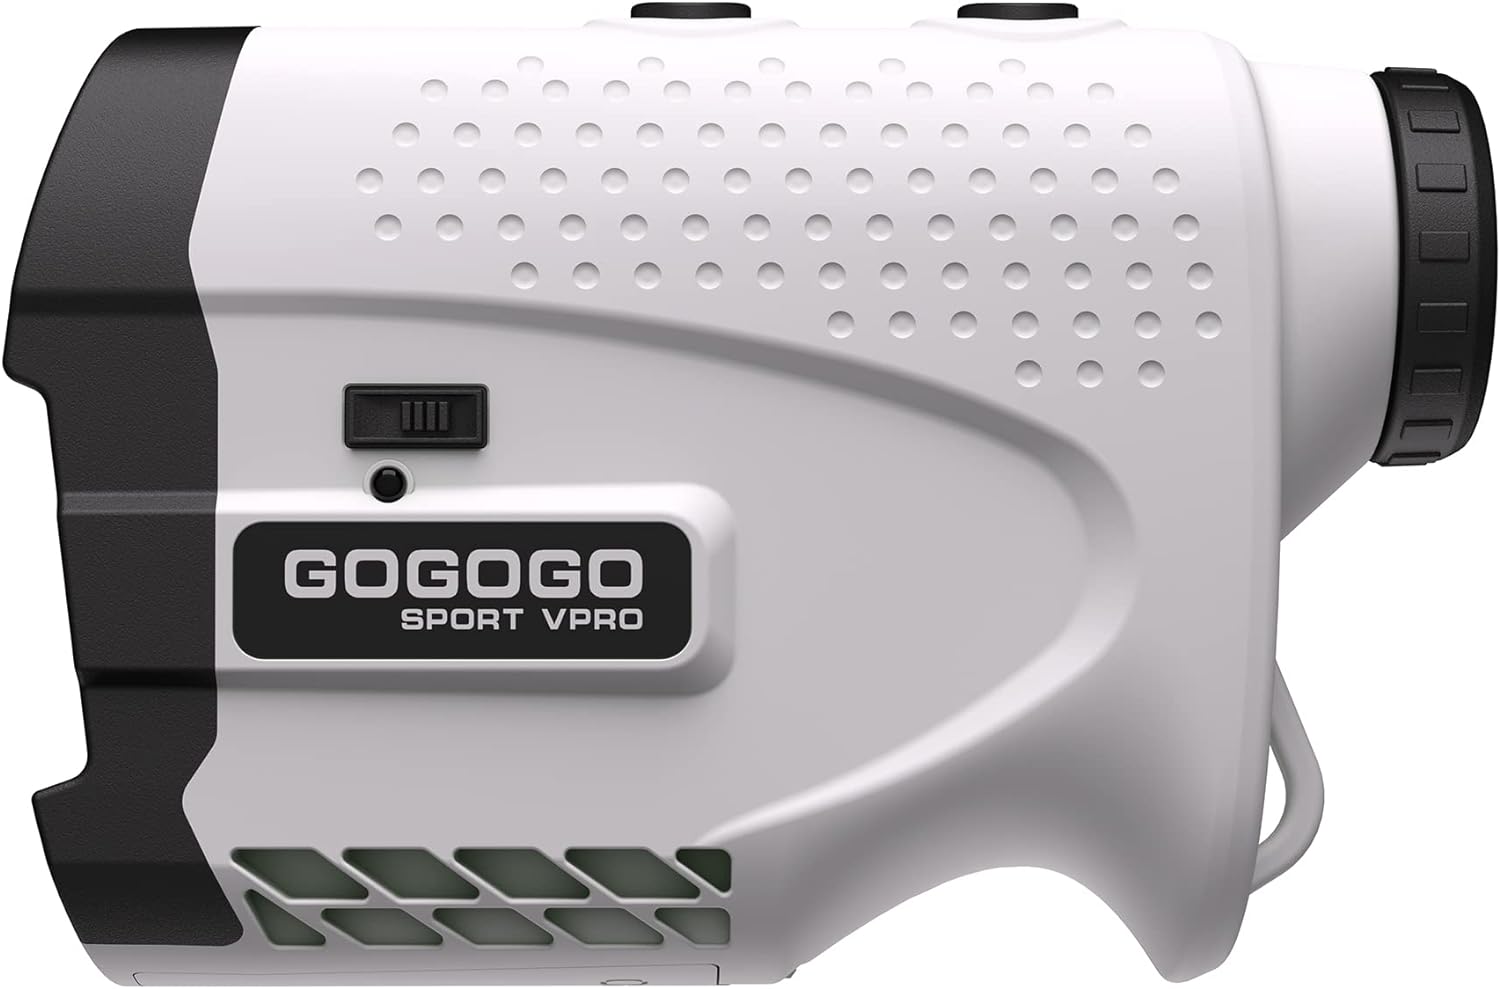 Gogogo Sport Vpro Laser Rangefinder for Golf & Hunting Range Finder 1200 Yard Distance Measuring with High-Precision Flag Pole Locking Vibration Function Slope Mode Conti - $64.99